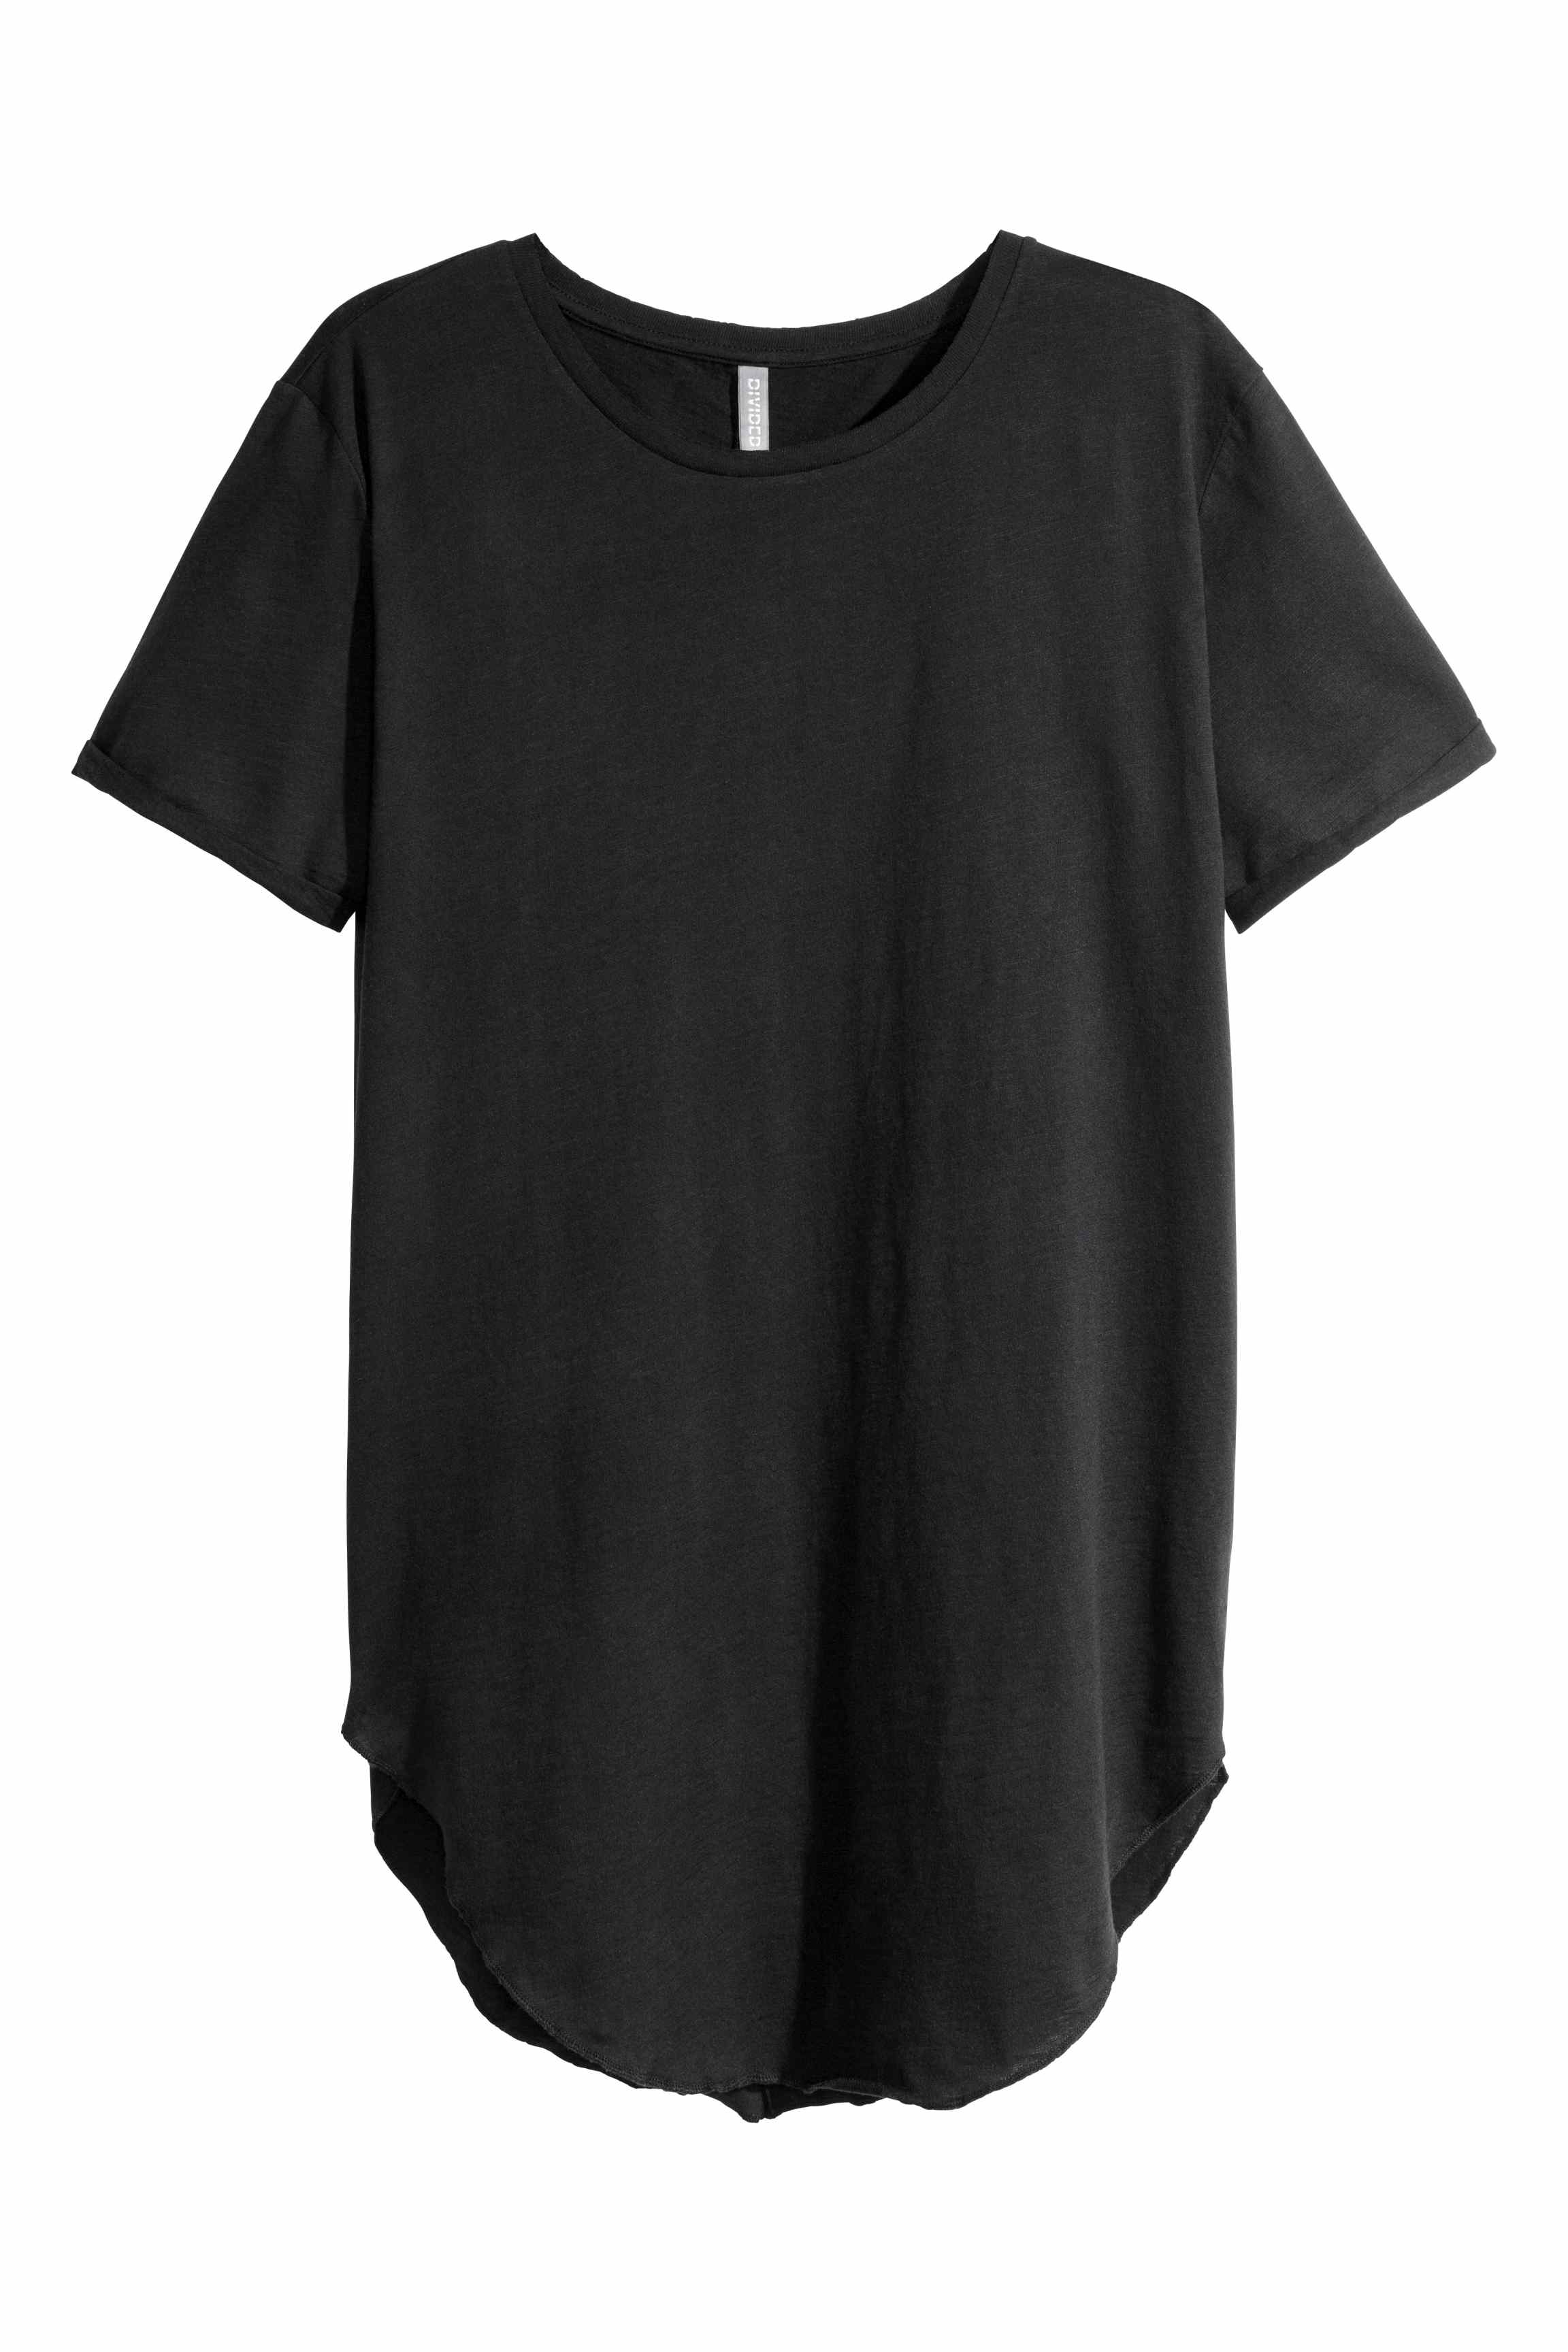 H&M Cotton Long T-shirt in Black for Men - Lyst